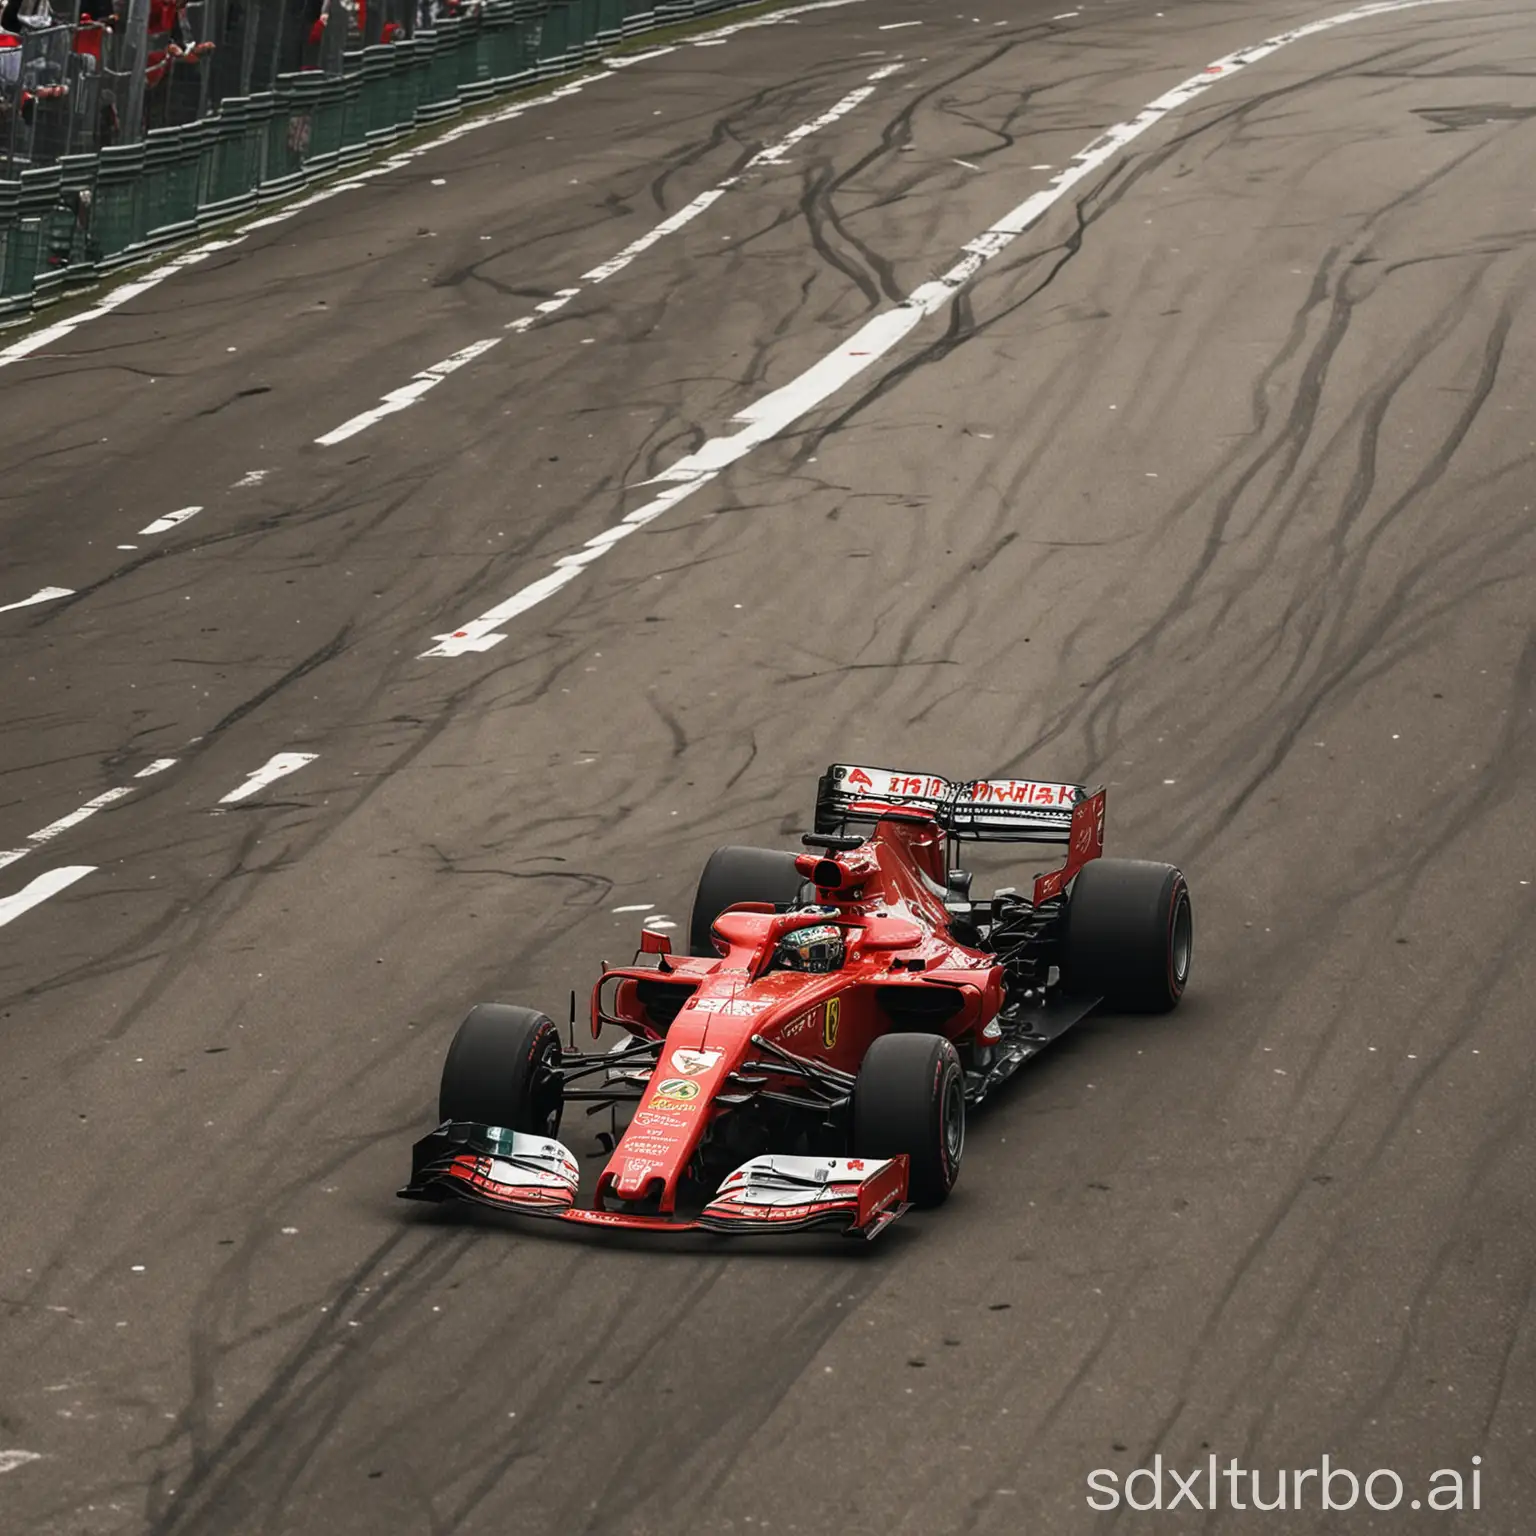 Lewis-Hamilton-Celebrating-Victory-at-Monza-in-a-Ferrari-Formula-One-Race